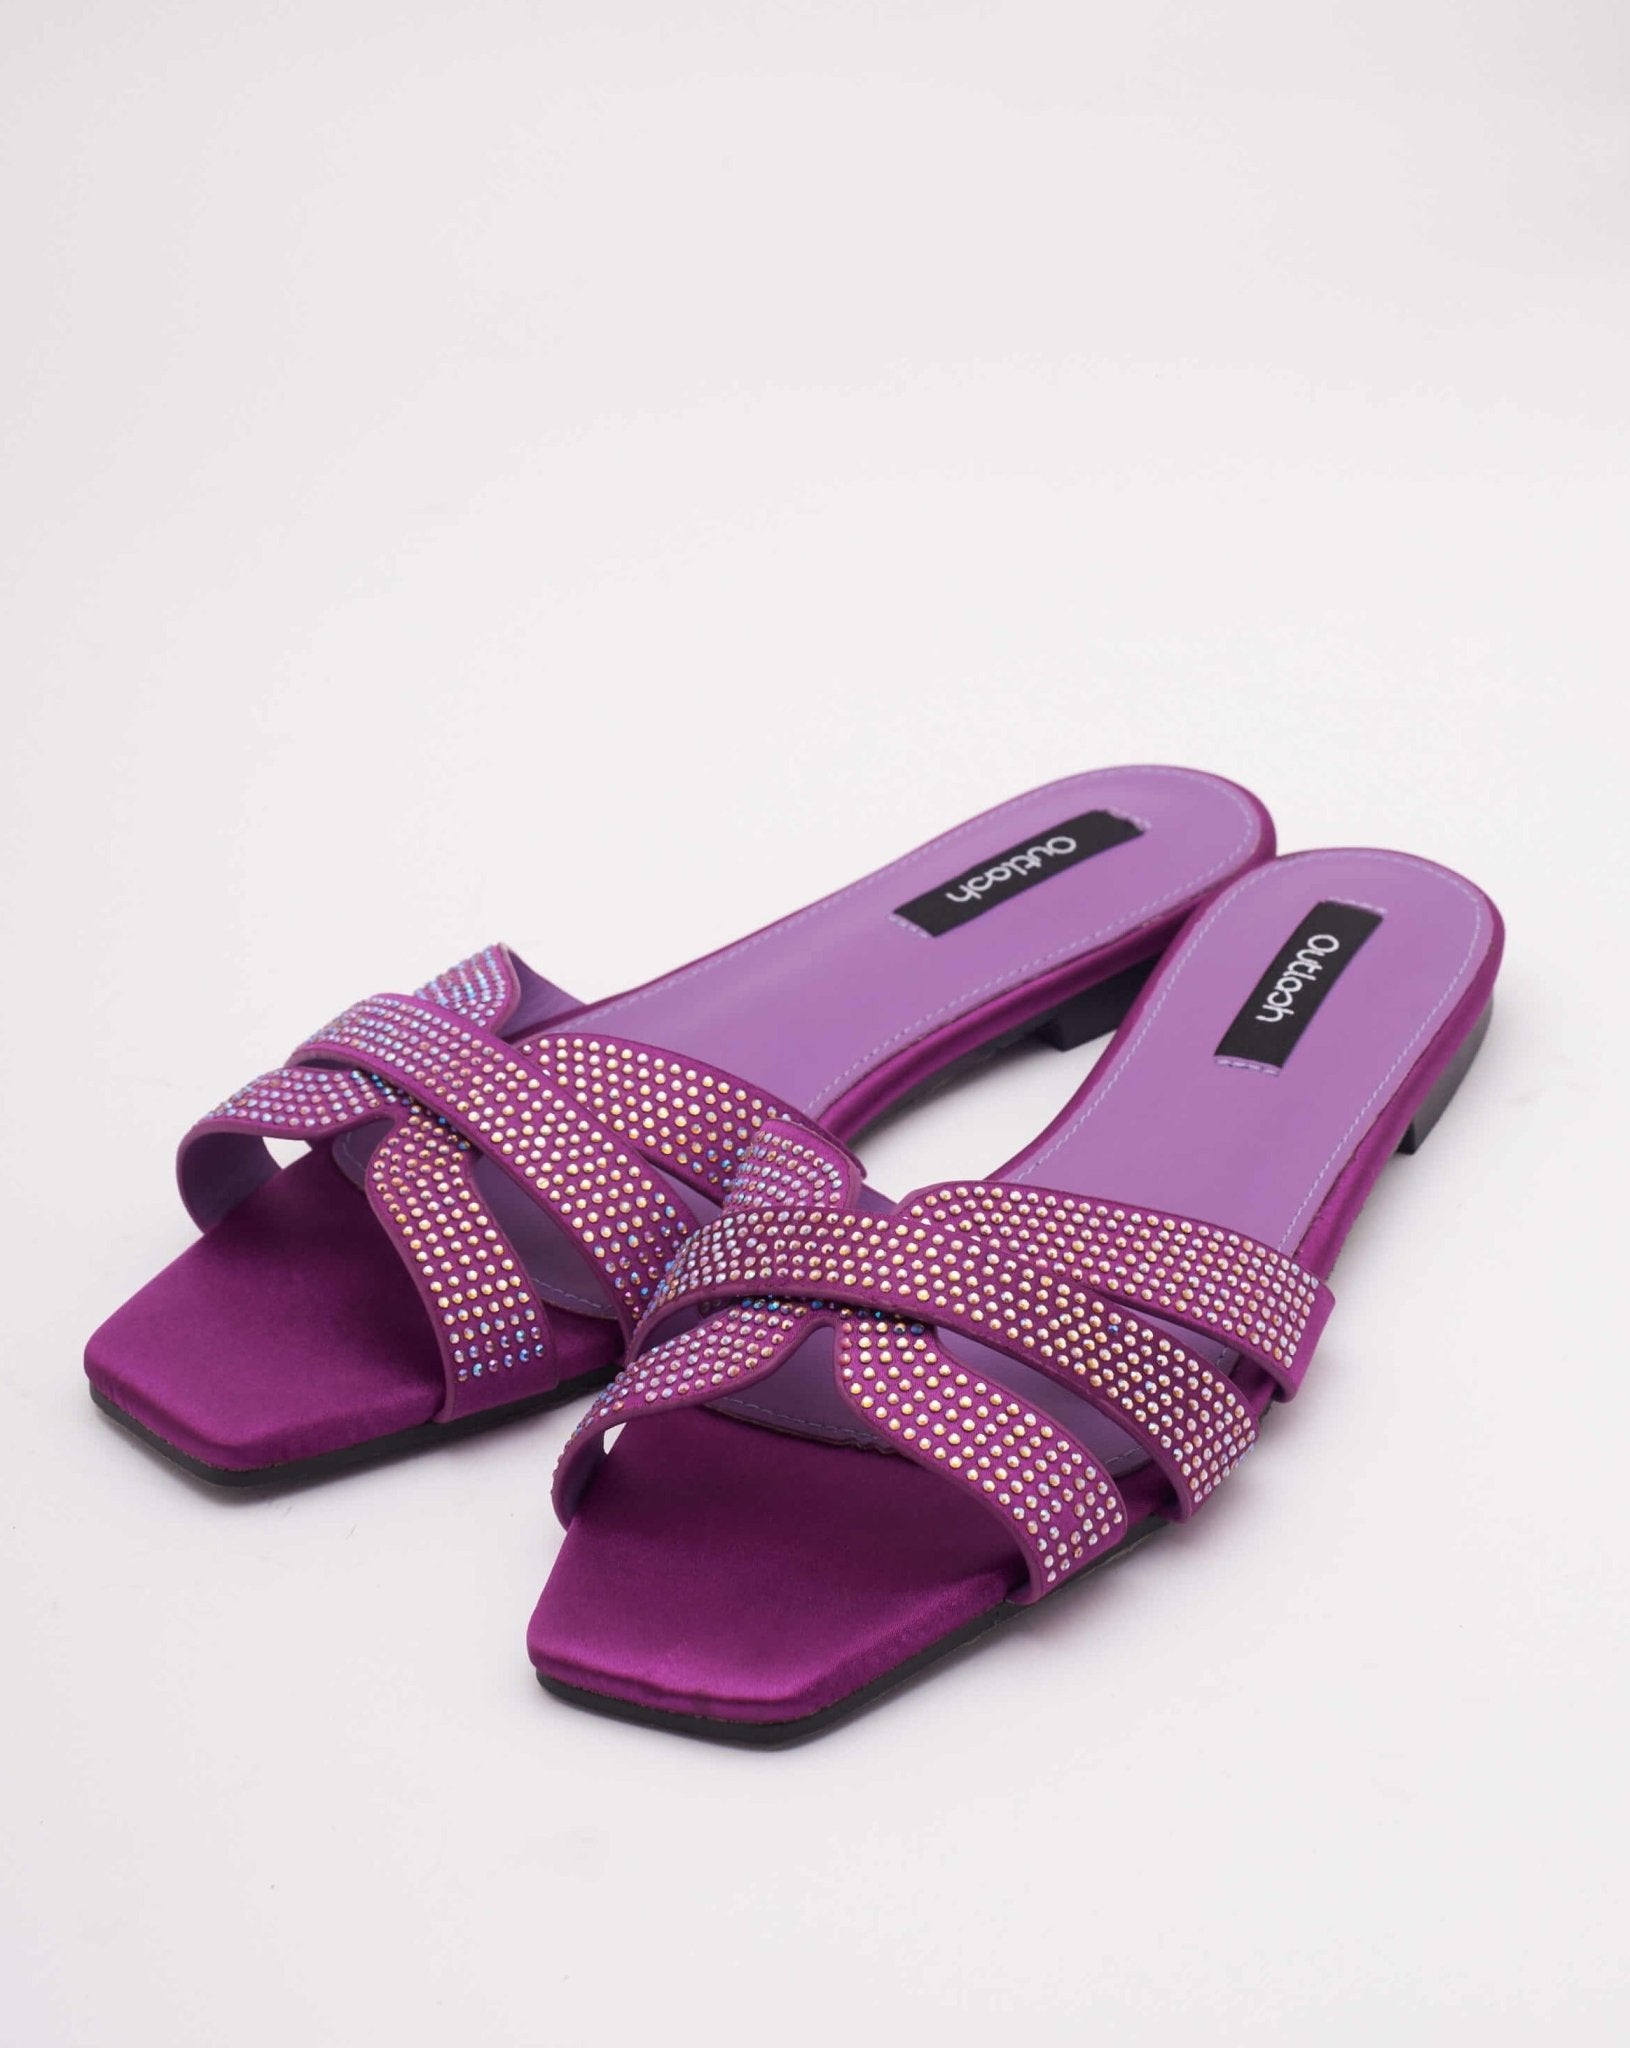 GLINT Slides in Purple - Outlash brand